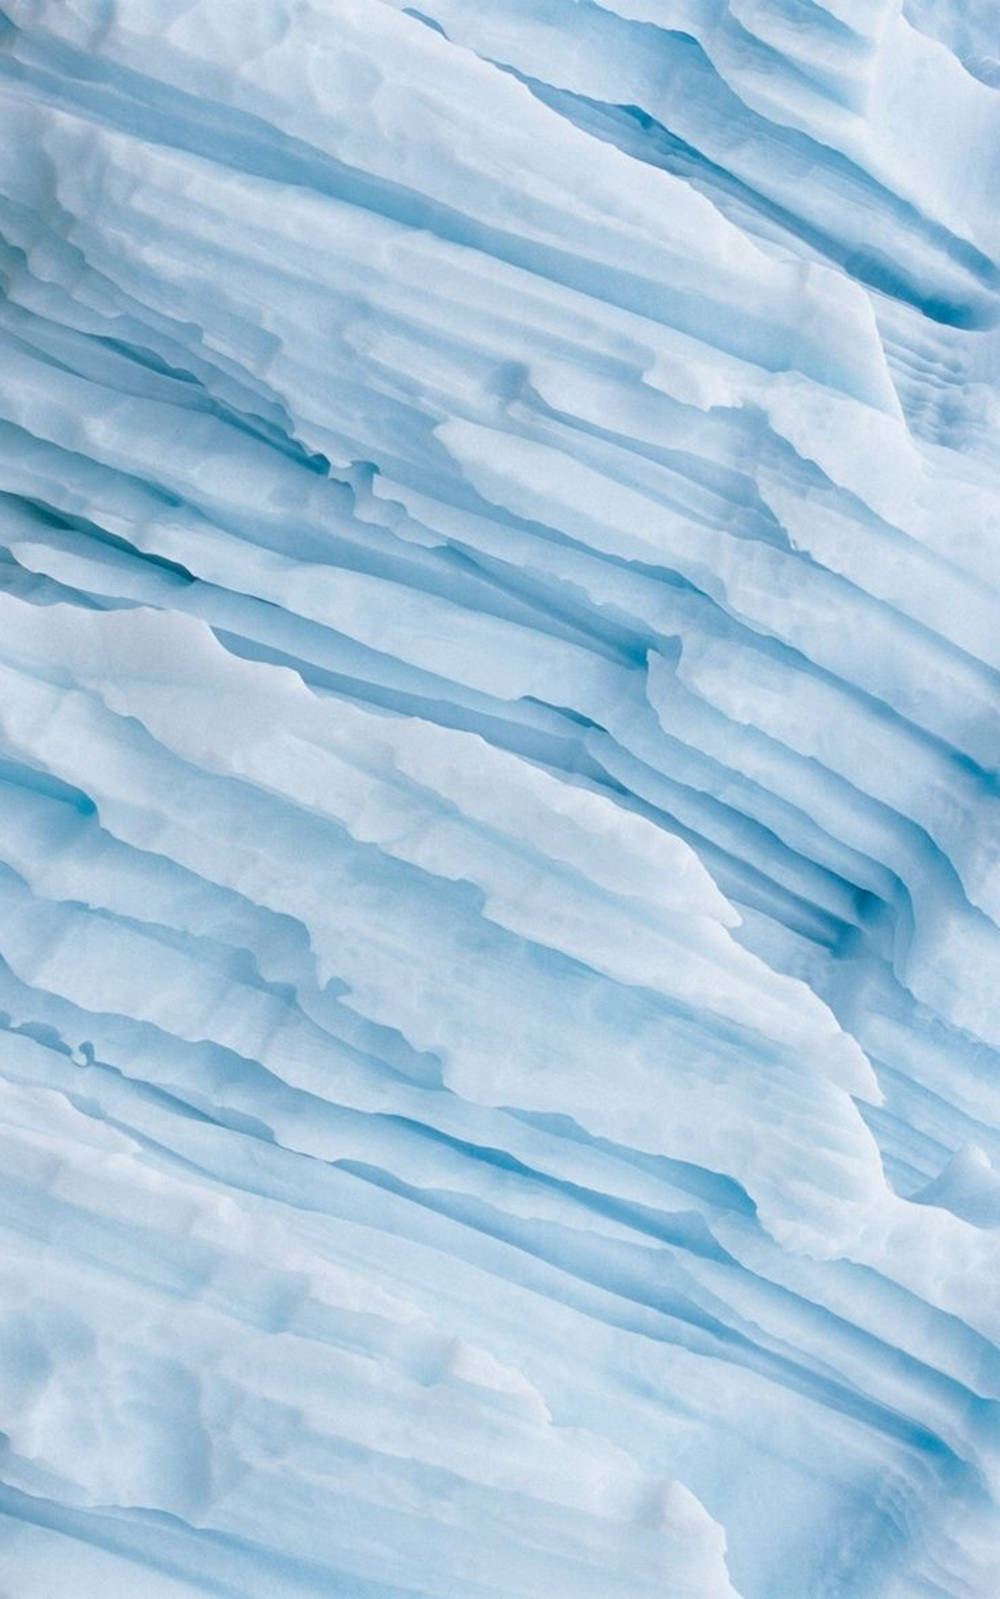 Textured Ice Sheet Blue Aesthetic Tumblr Background